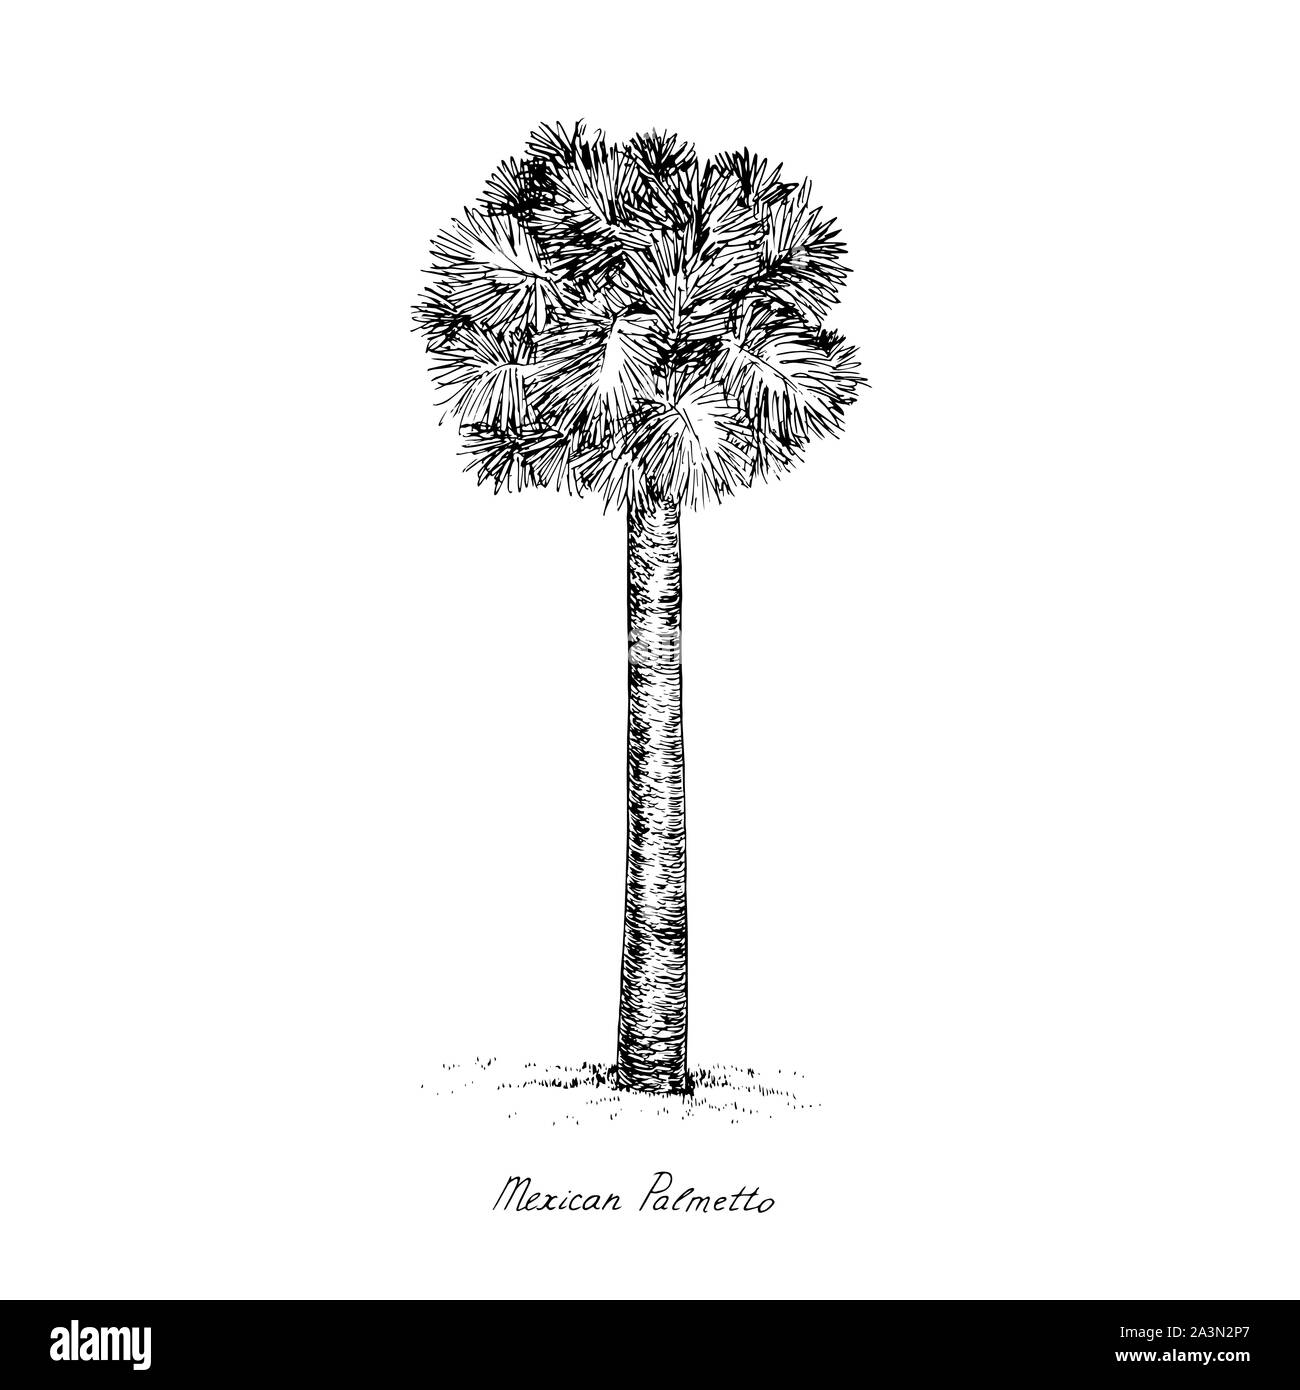 Sabal mexicana (Rio Grande, Mexican or Texas palmetto, Texas sabal palm, palmmetto cabbage) tree silhouette, hand drawn gravure style, sketch Stock Photo